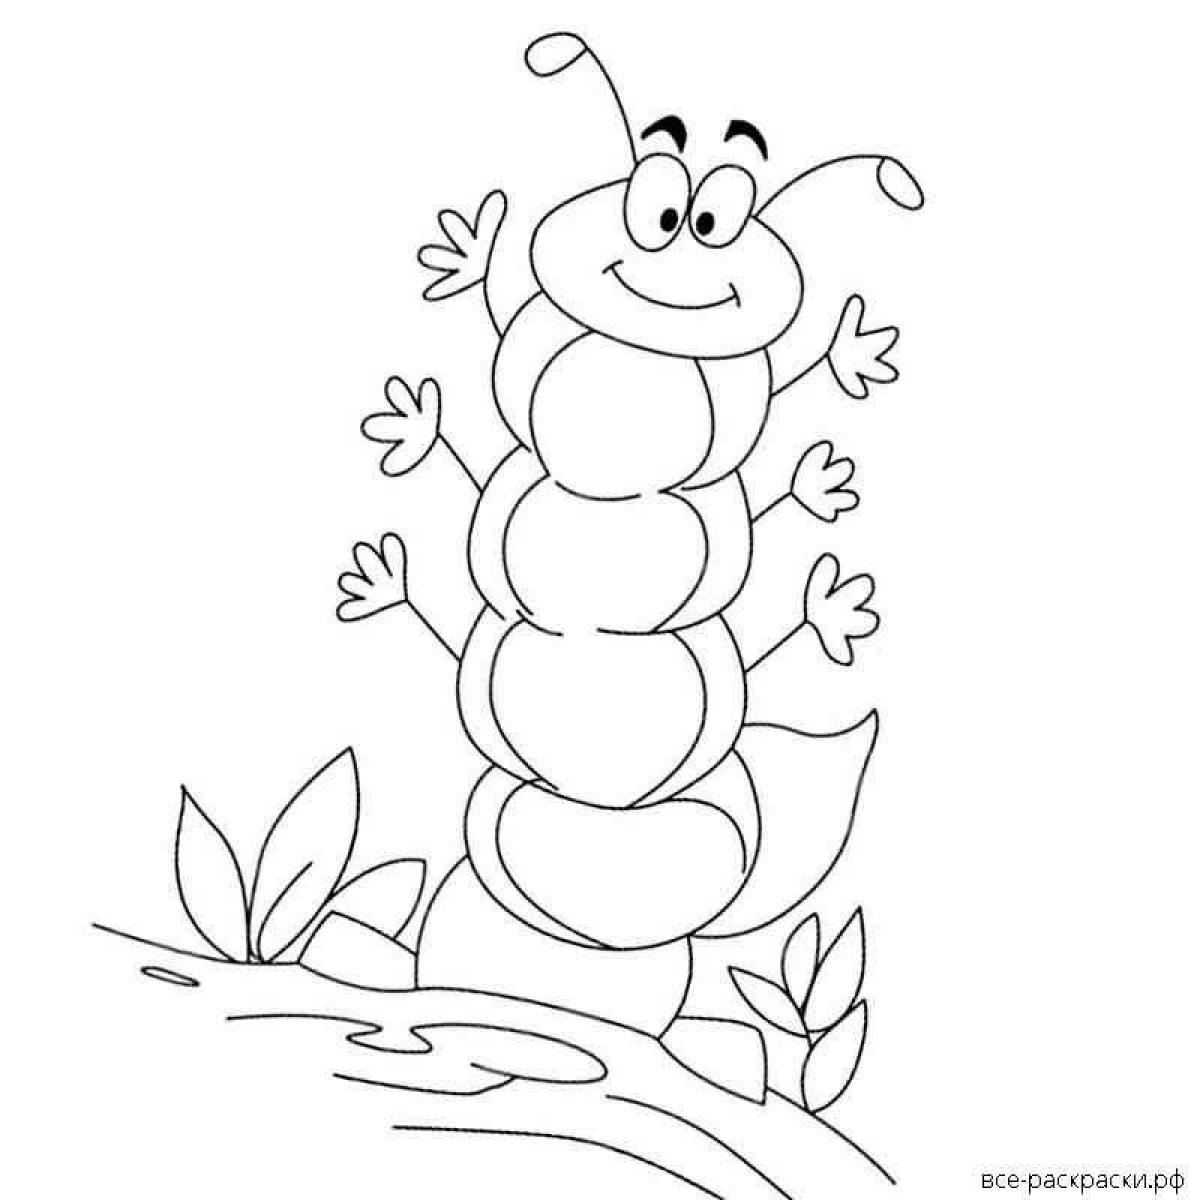 Adorable caterpillar coloring book for kids